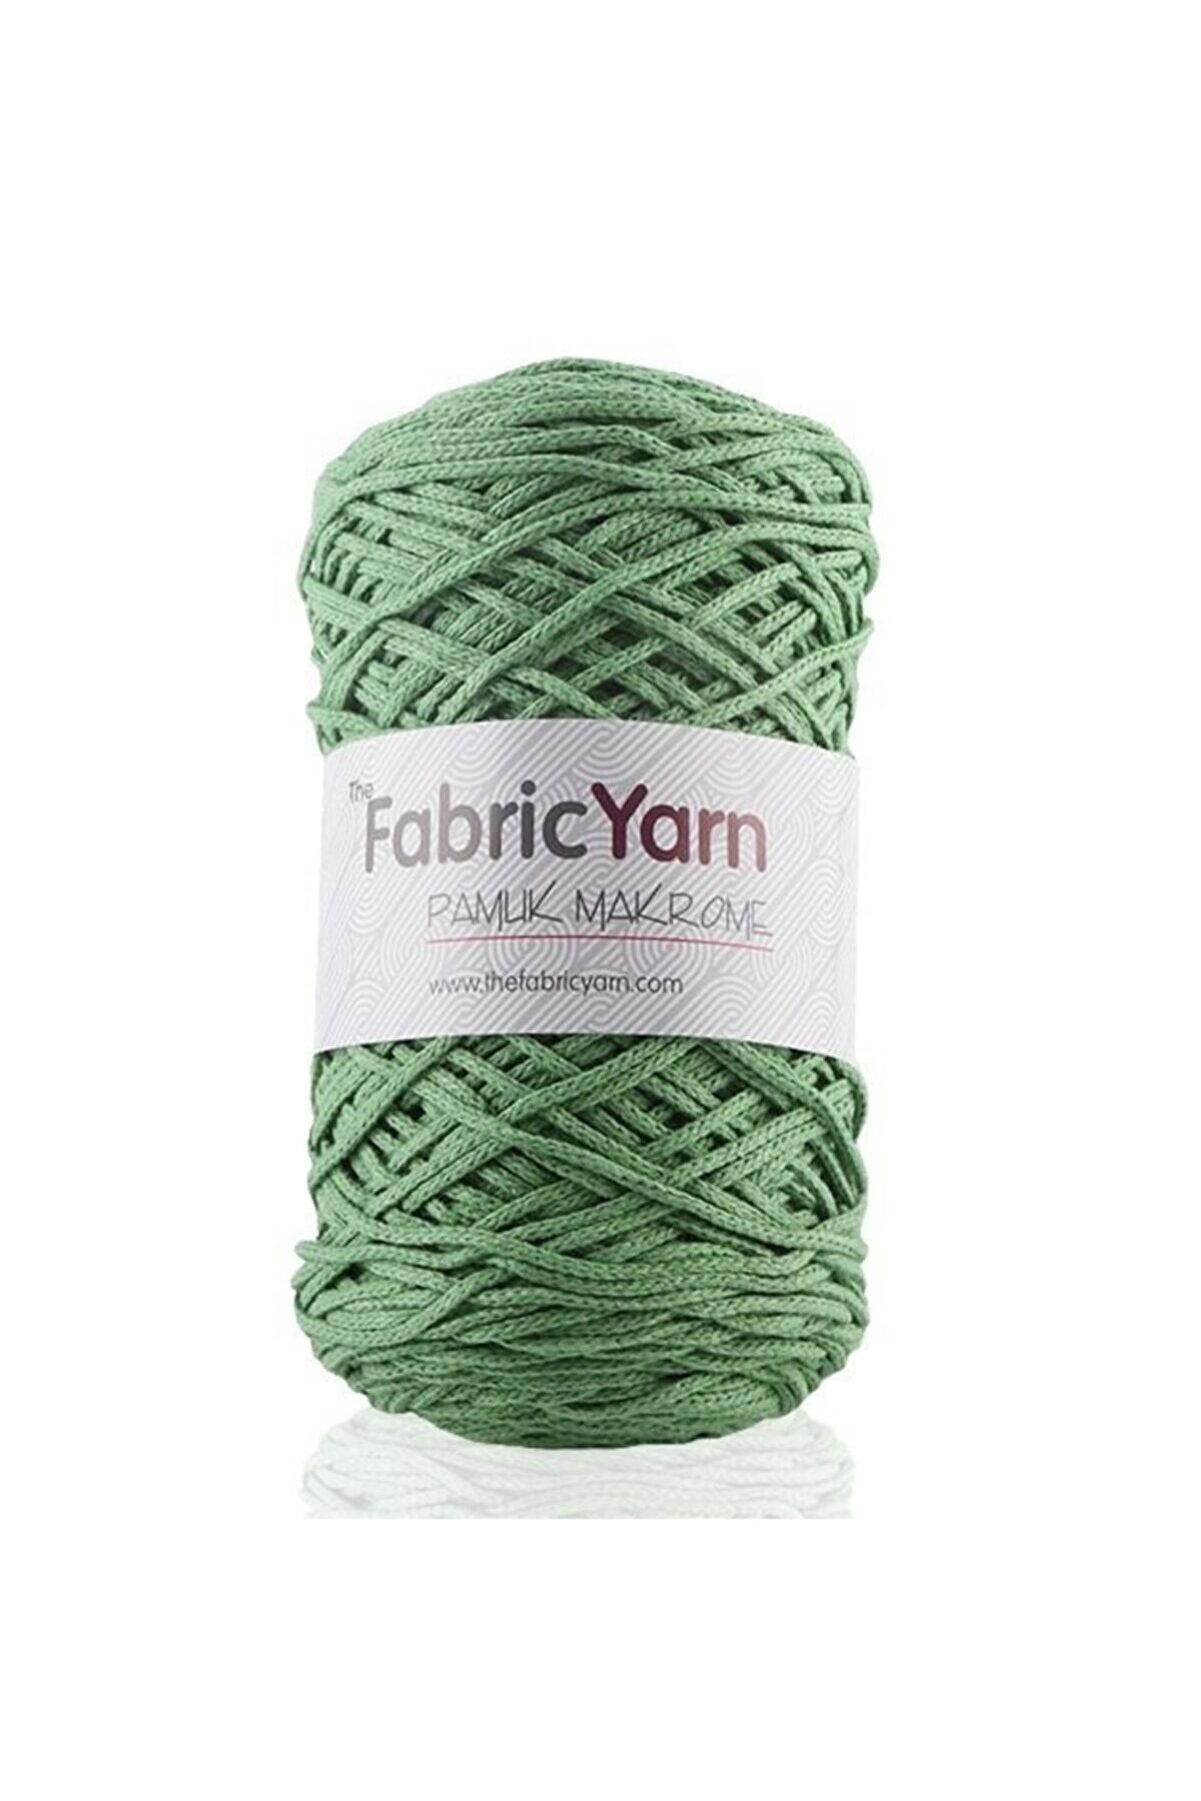 The Fabric Yarn Elma Yeşil Pamuk Makrome Ip